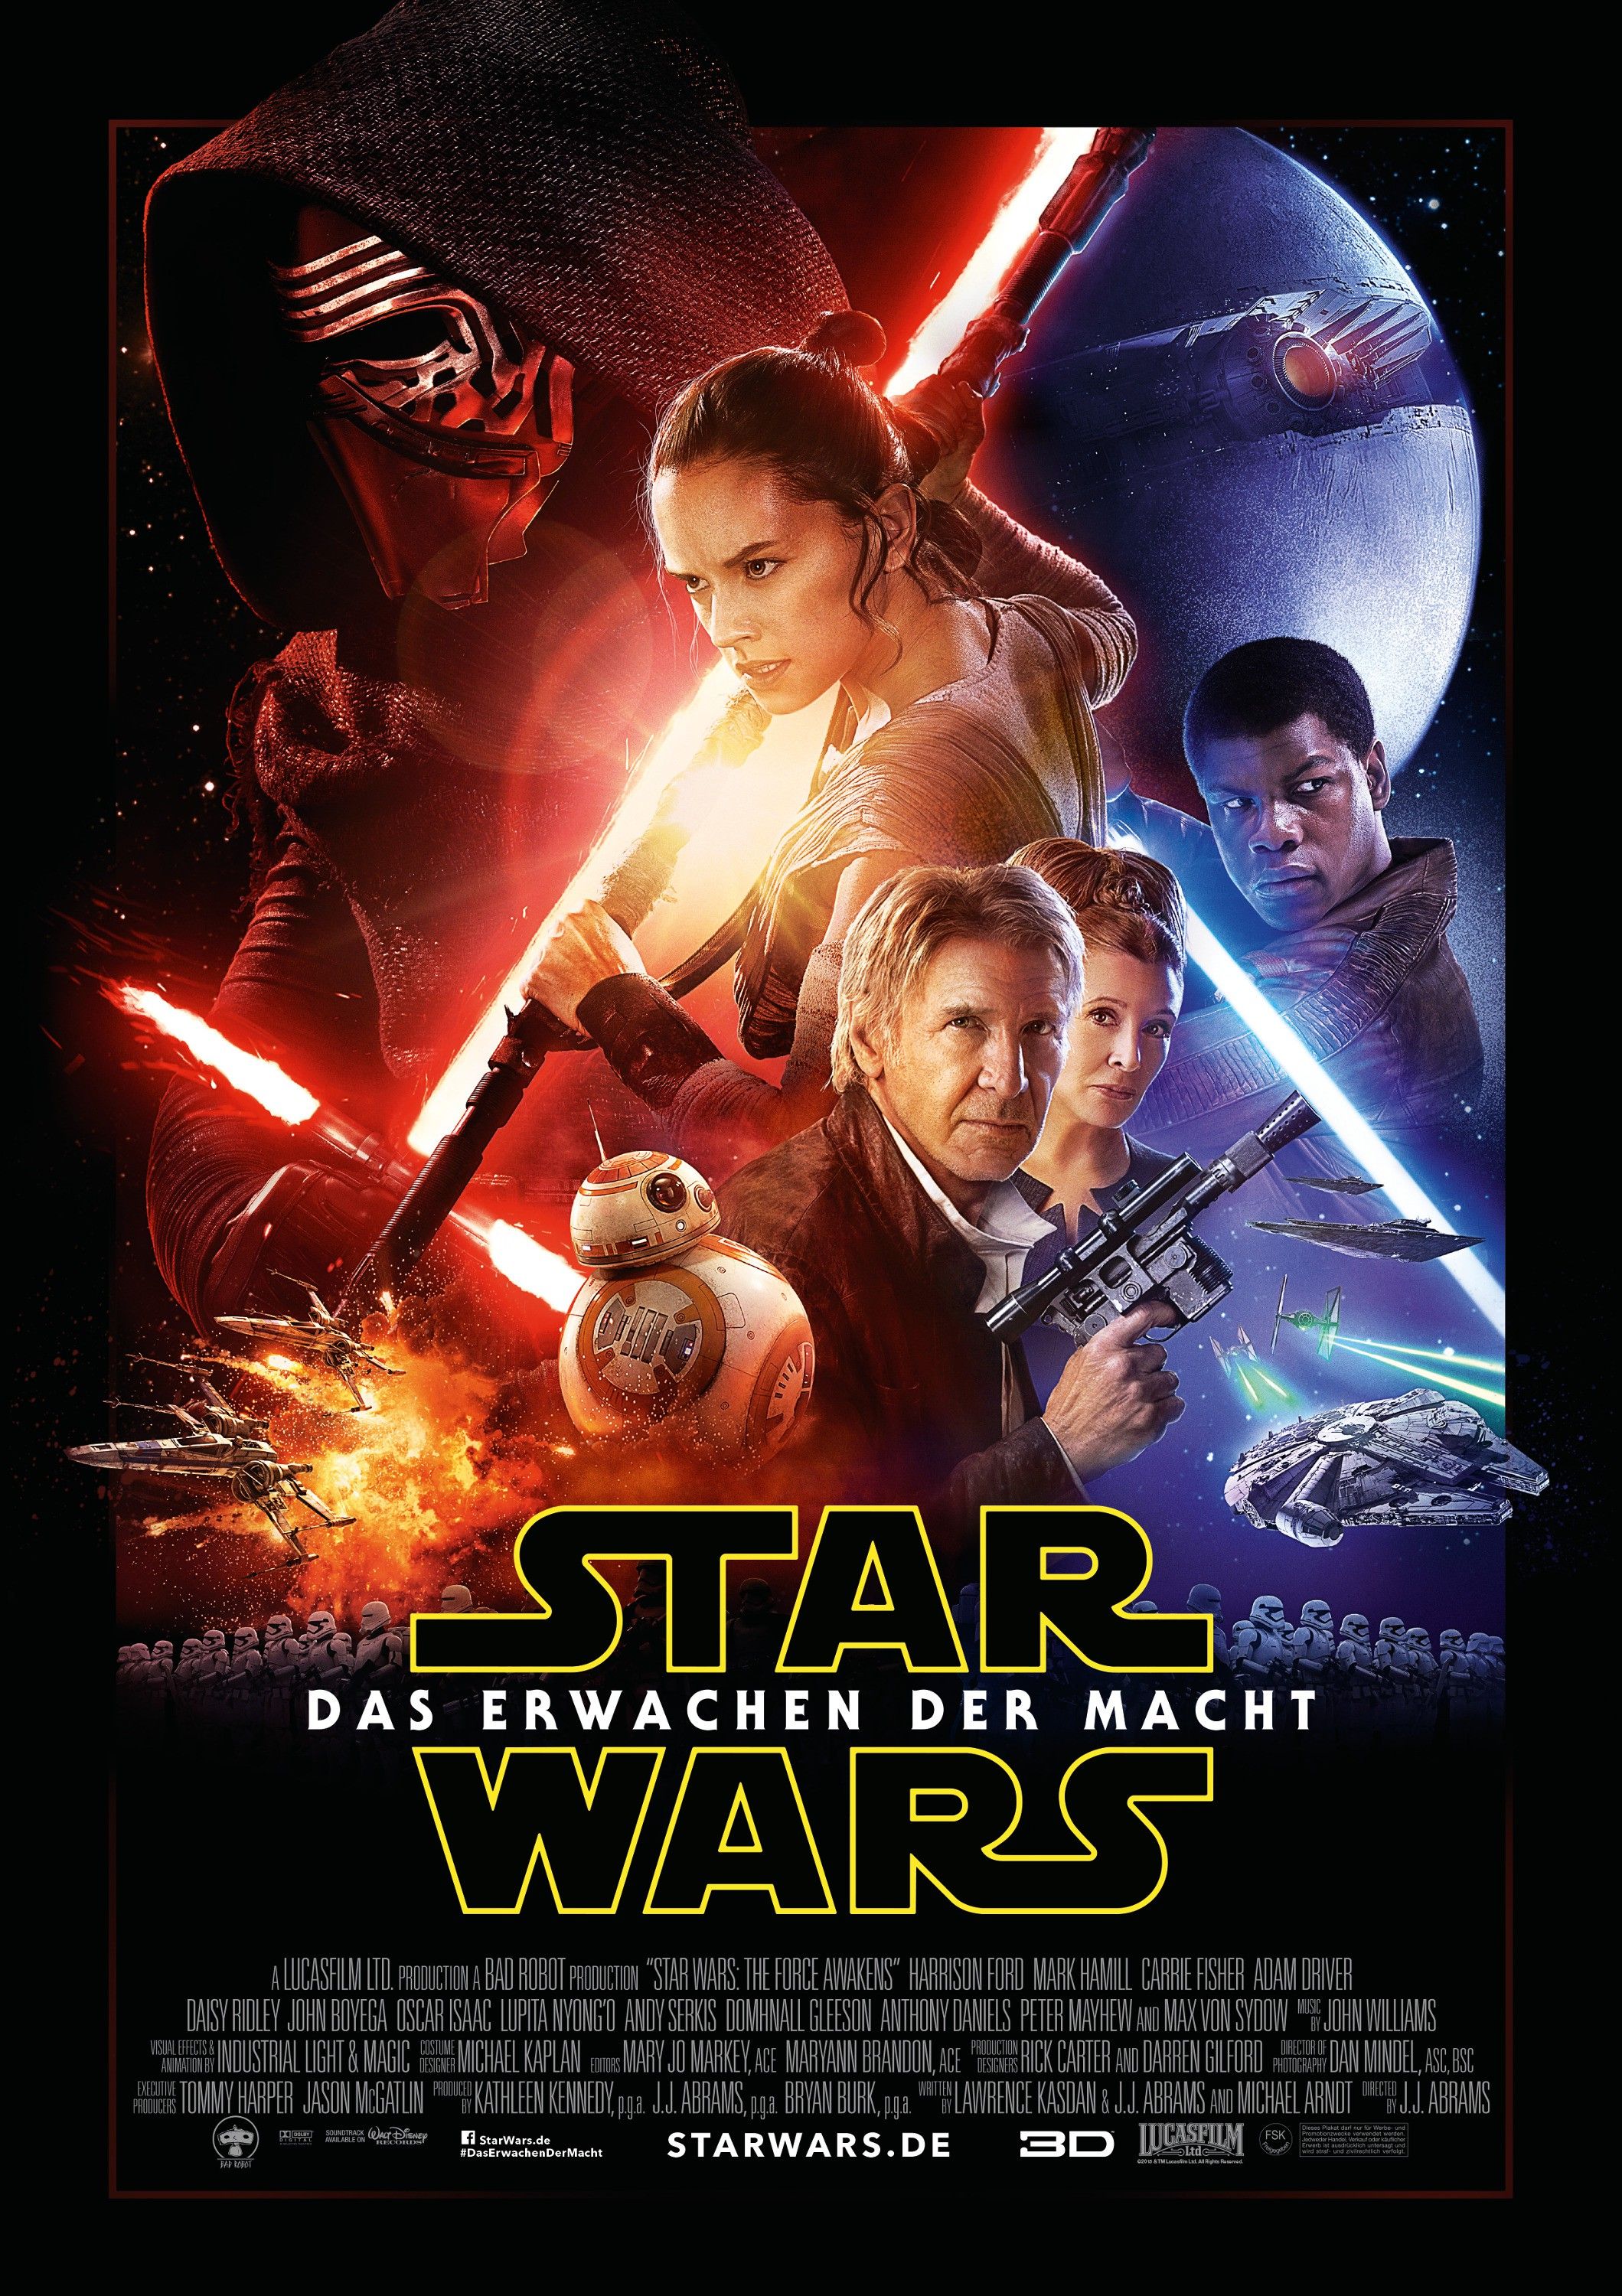 Star Wars 7 international poster